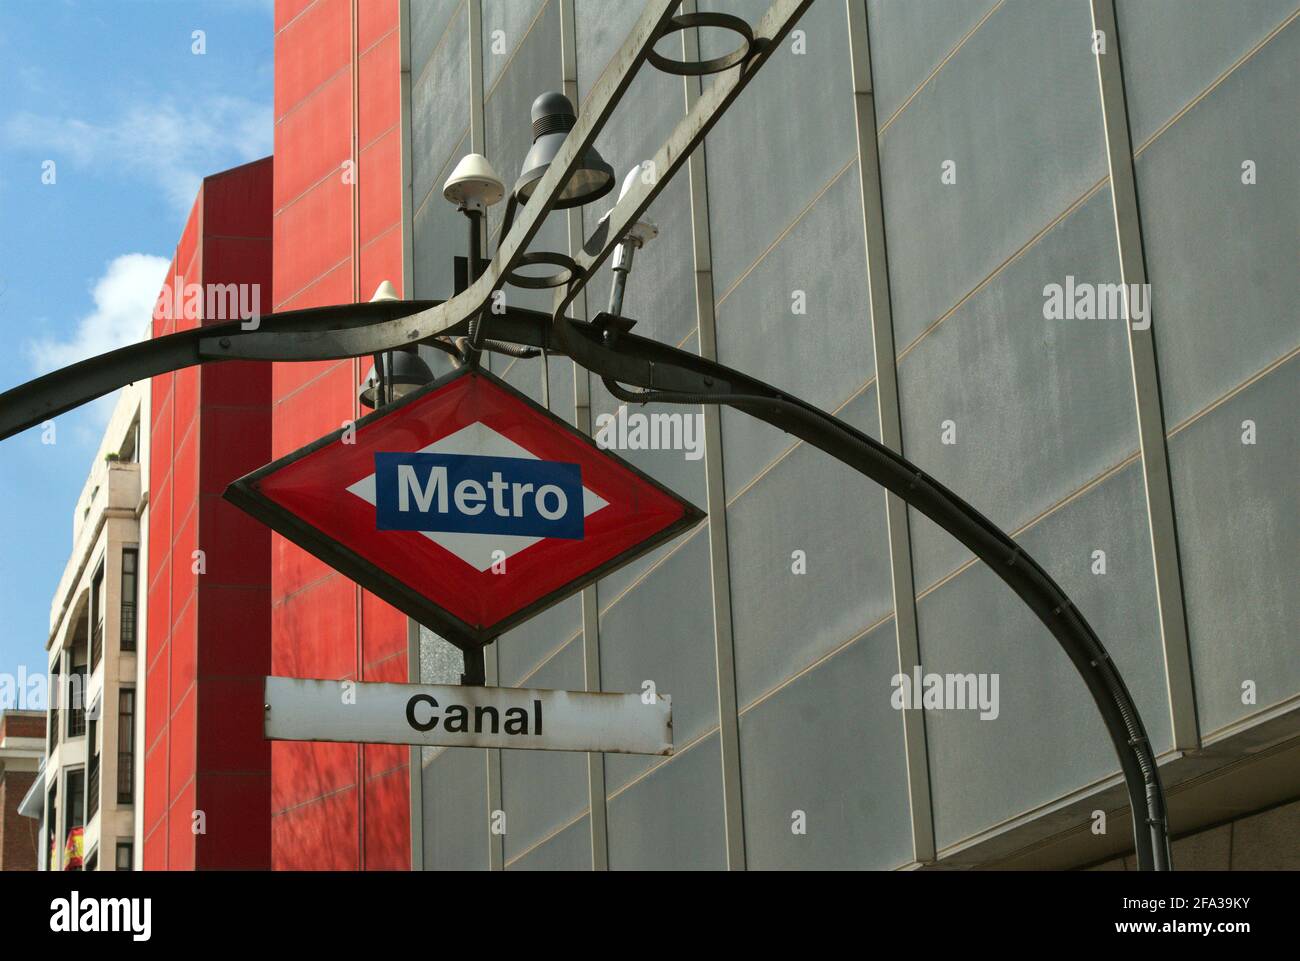 Canal Underground Station Stock Photo